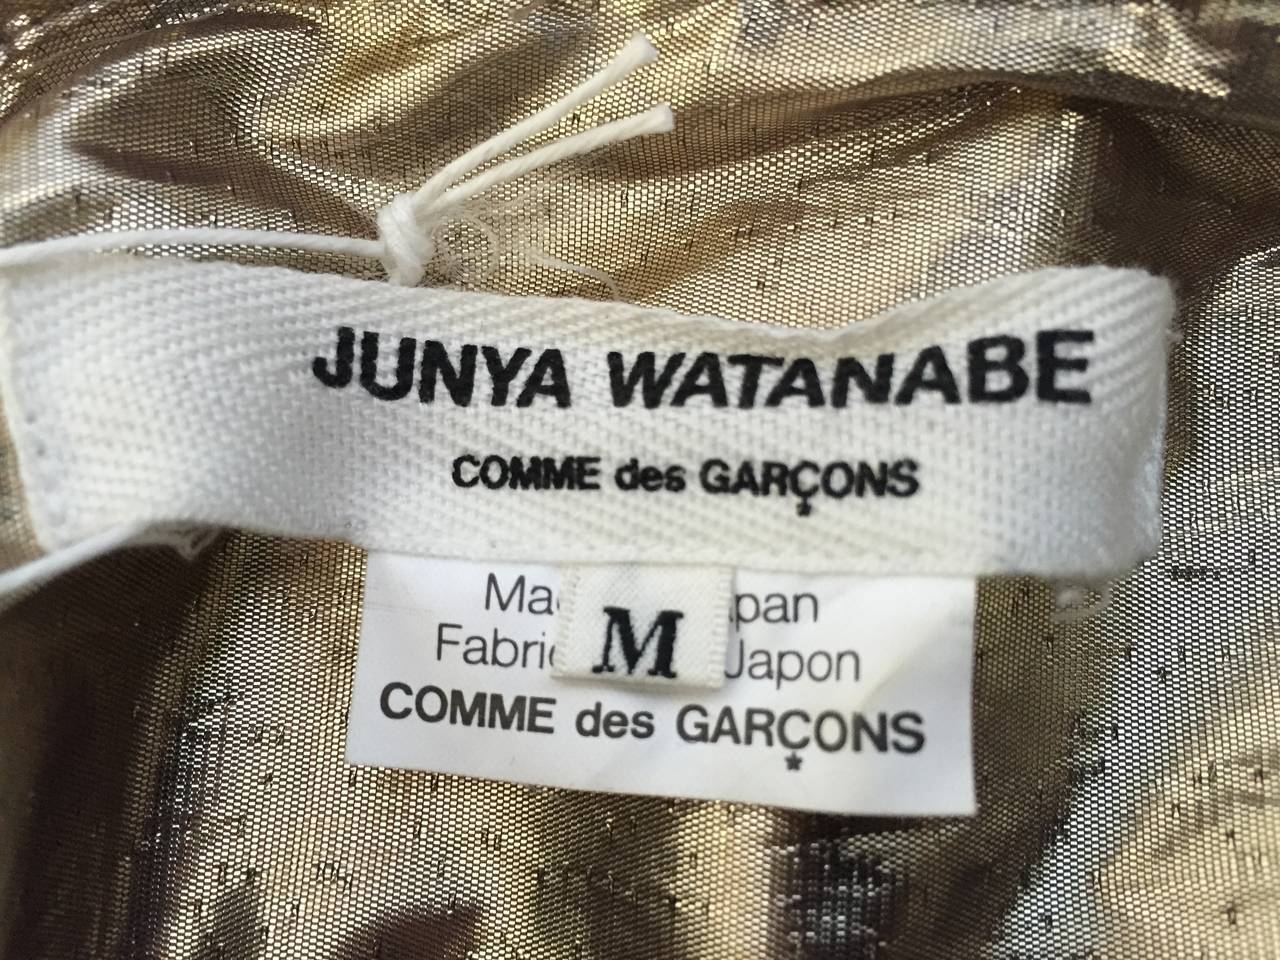 Junya Watanabe Comme des Garçons gold lame blouse size medium. 5